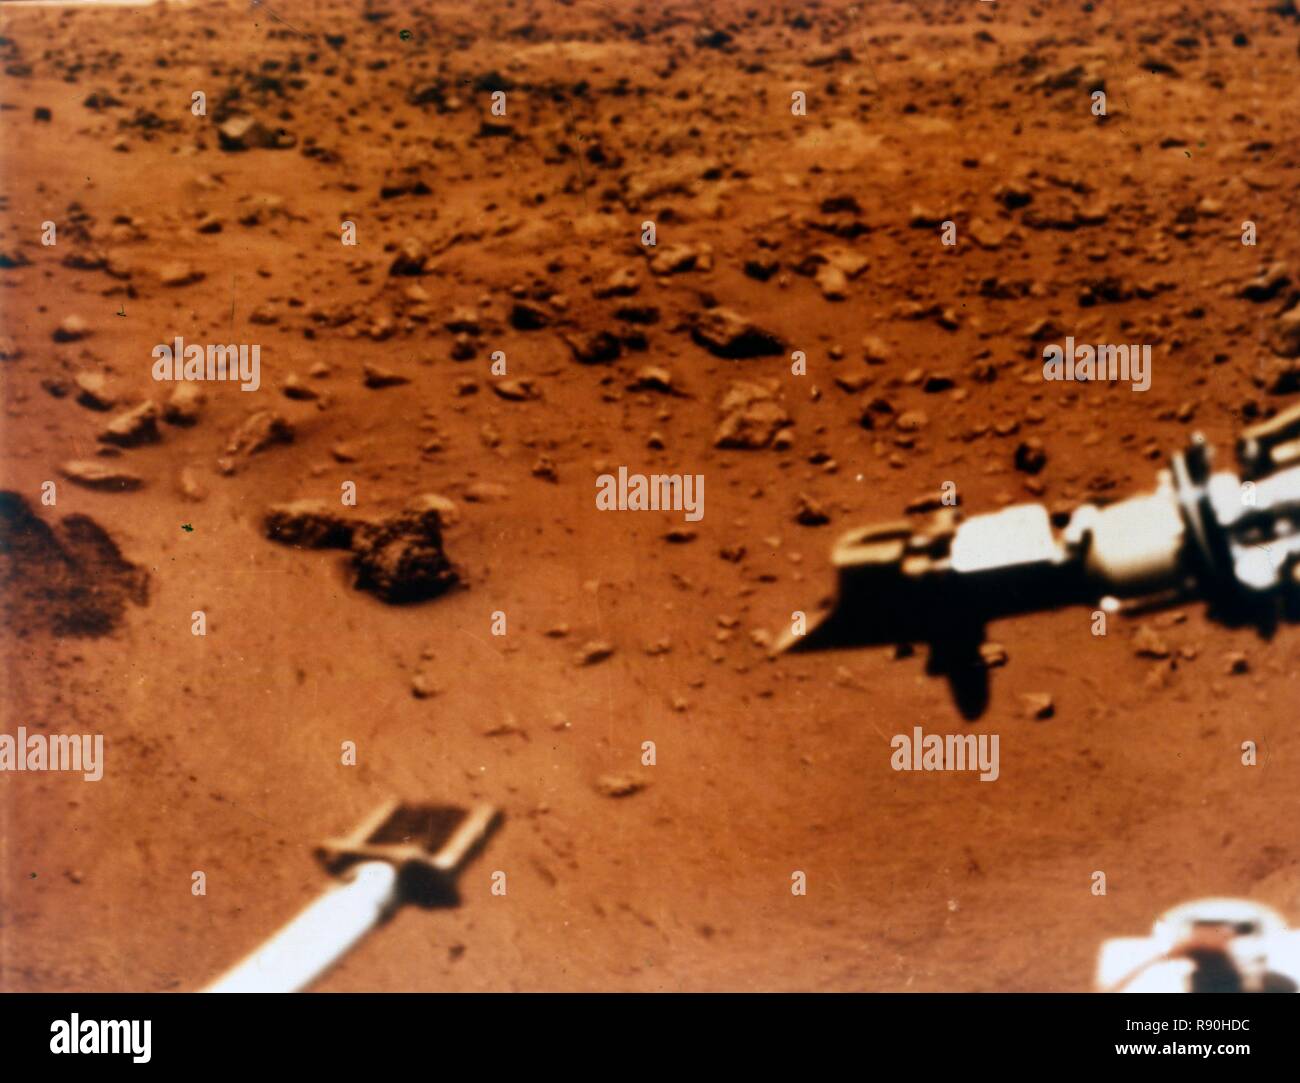 Sample scoop and arm, Viking 1 Mission to Mars, 1976. Creator: NASA. Stock Photo